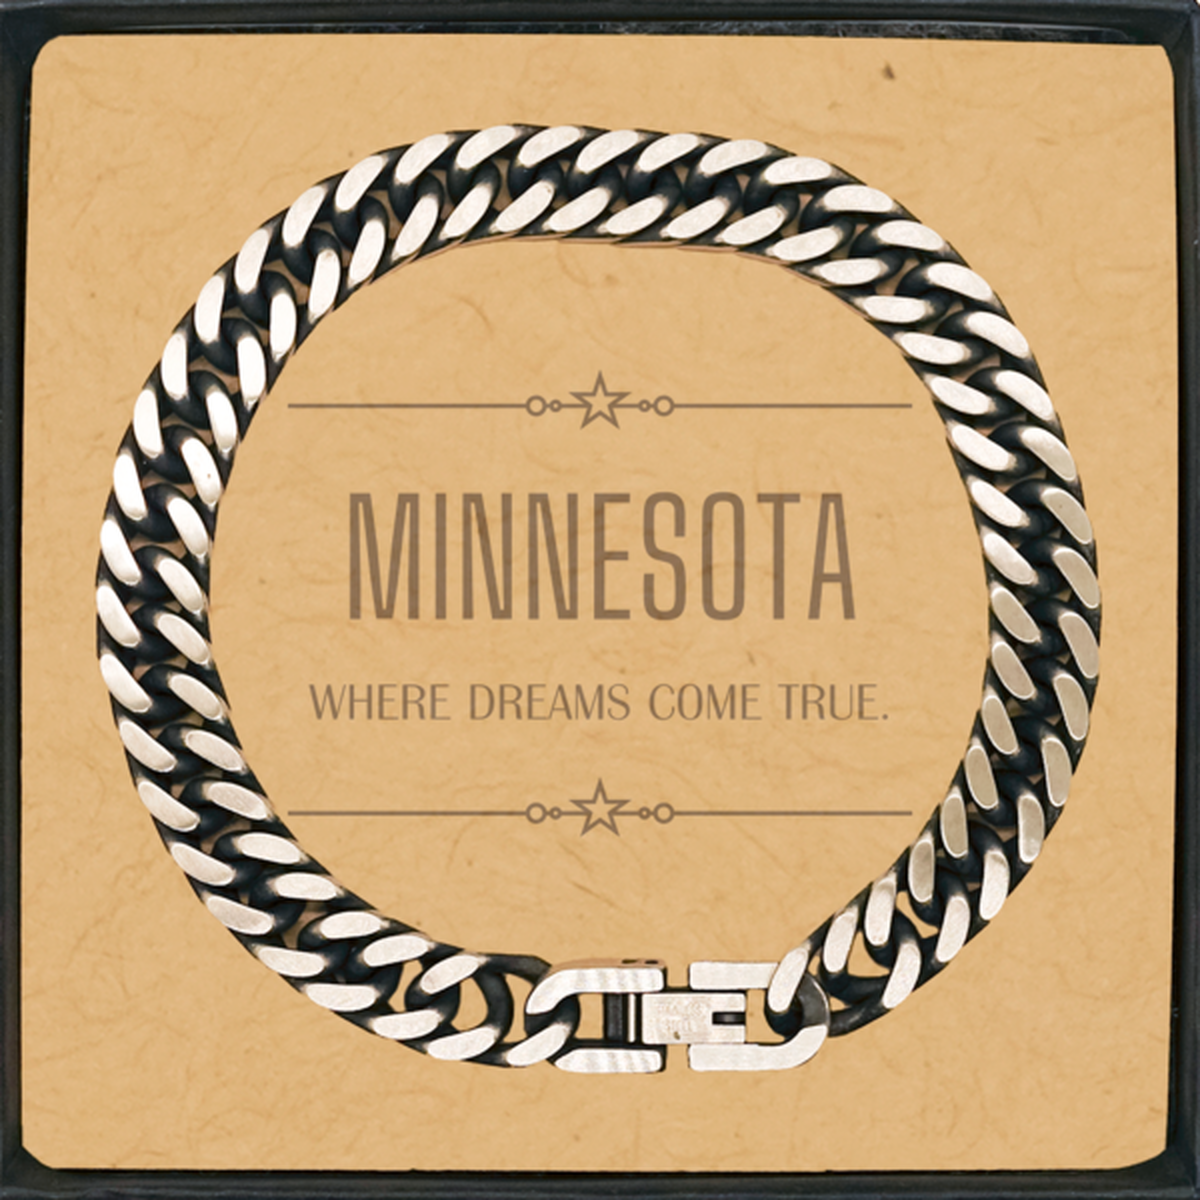 Love Minnesota State Cuban Link Chain Bracelet, Minnesota Where dreams come true, Birthday Inspirational Gifts For Minnesota Men, Women, Friends